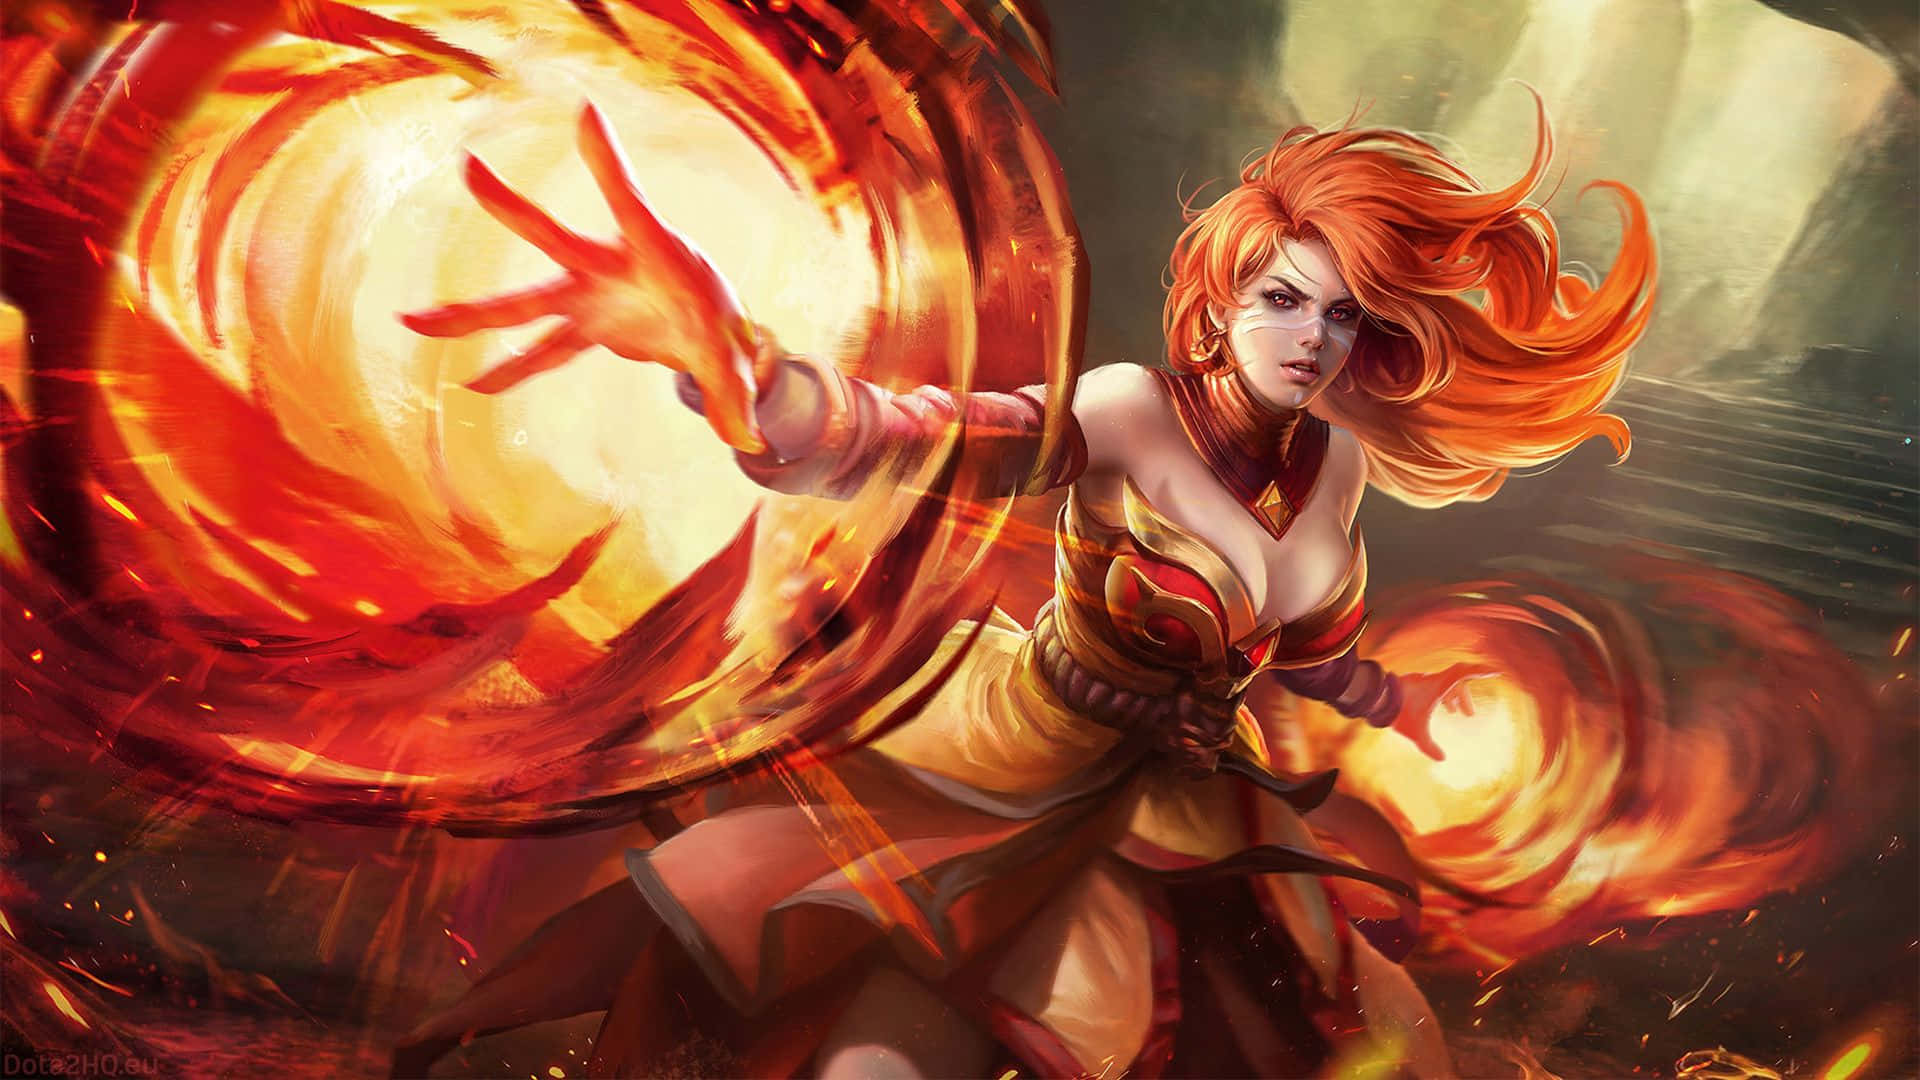 Fiery mage Lina casting spells in Dota 2. Wallpaper